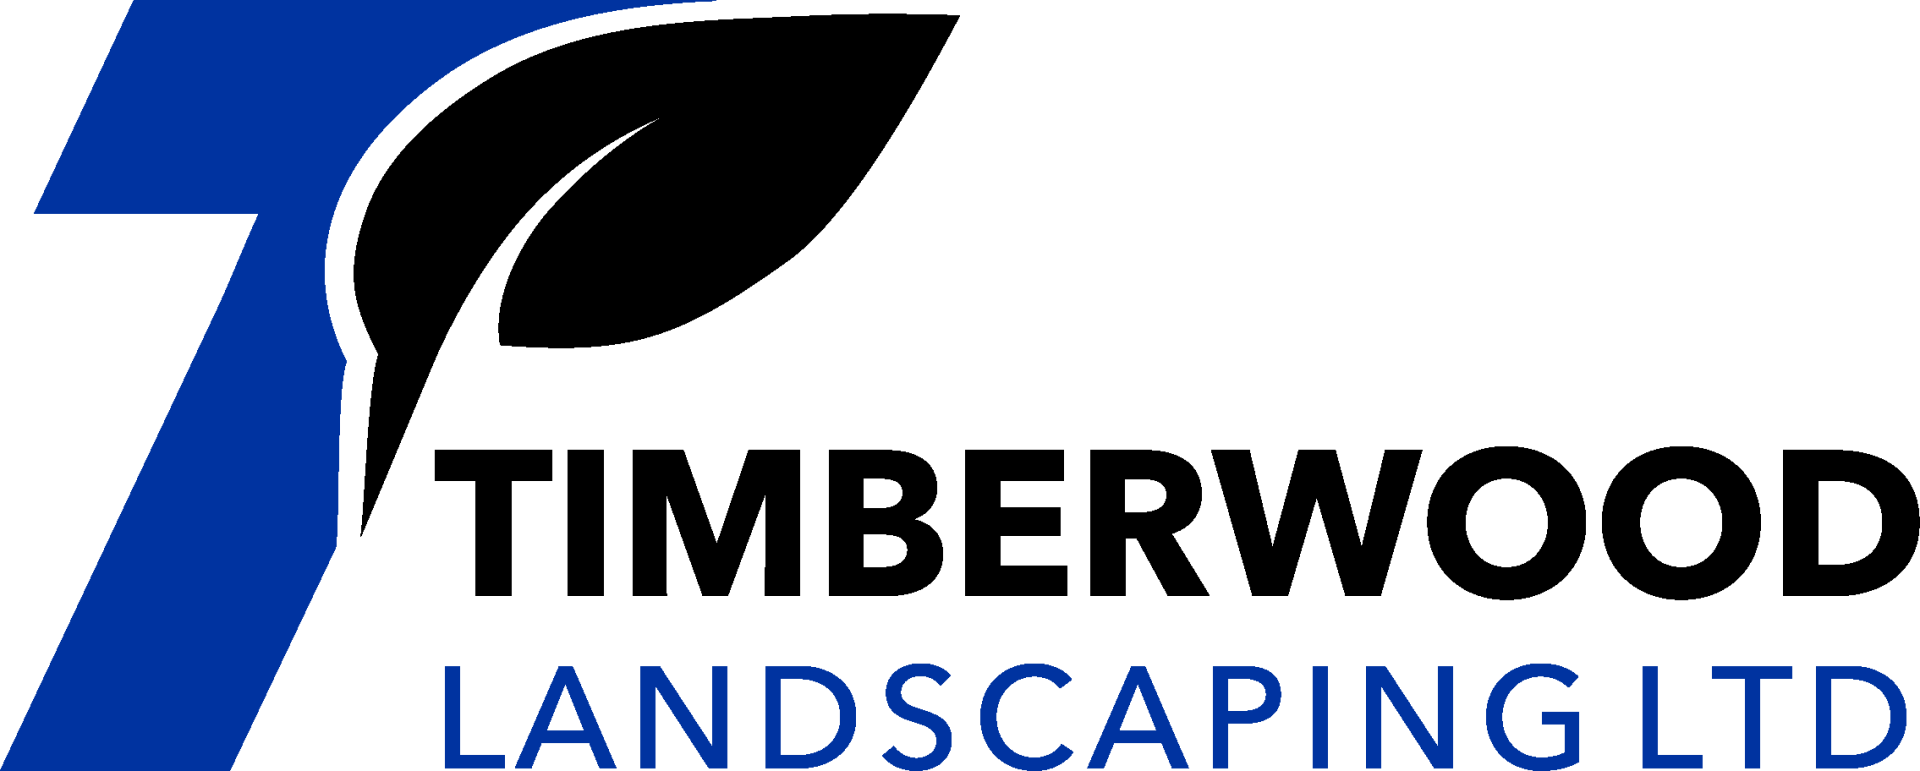 Timberwood Landscaping Ltd Logo